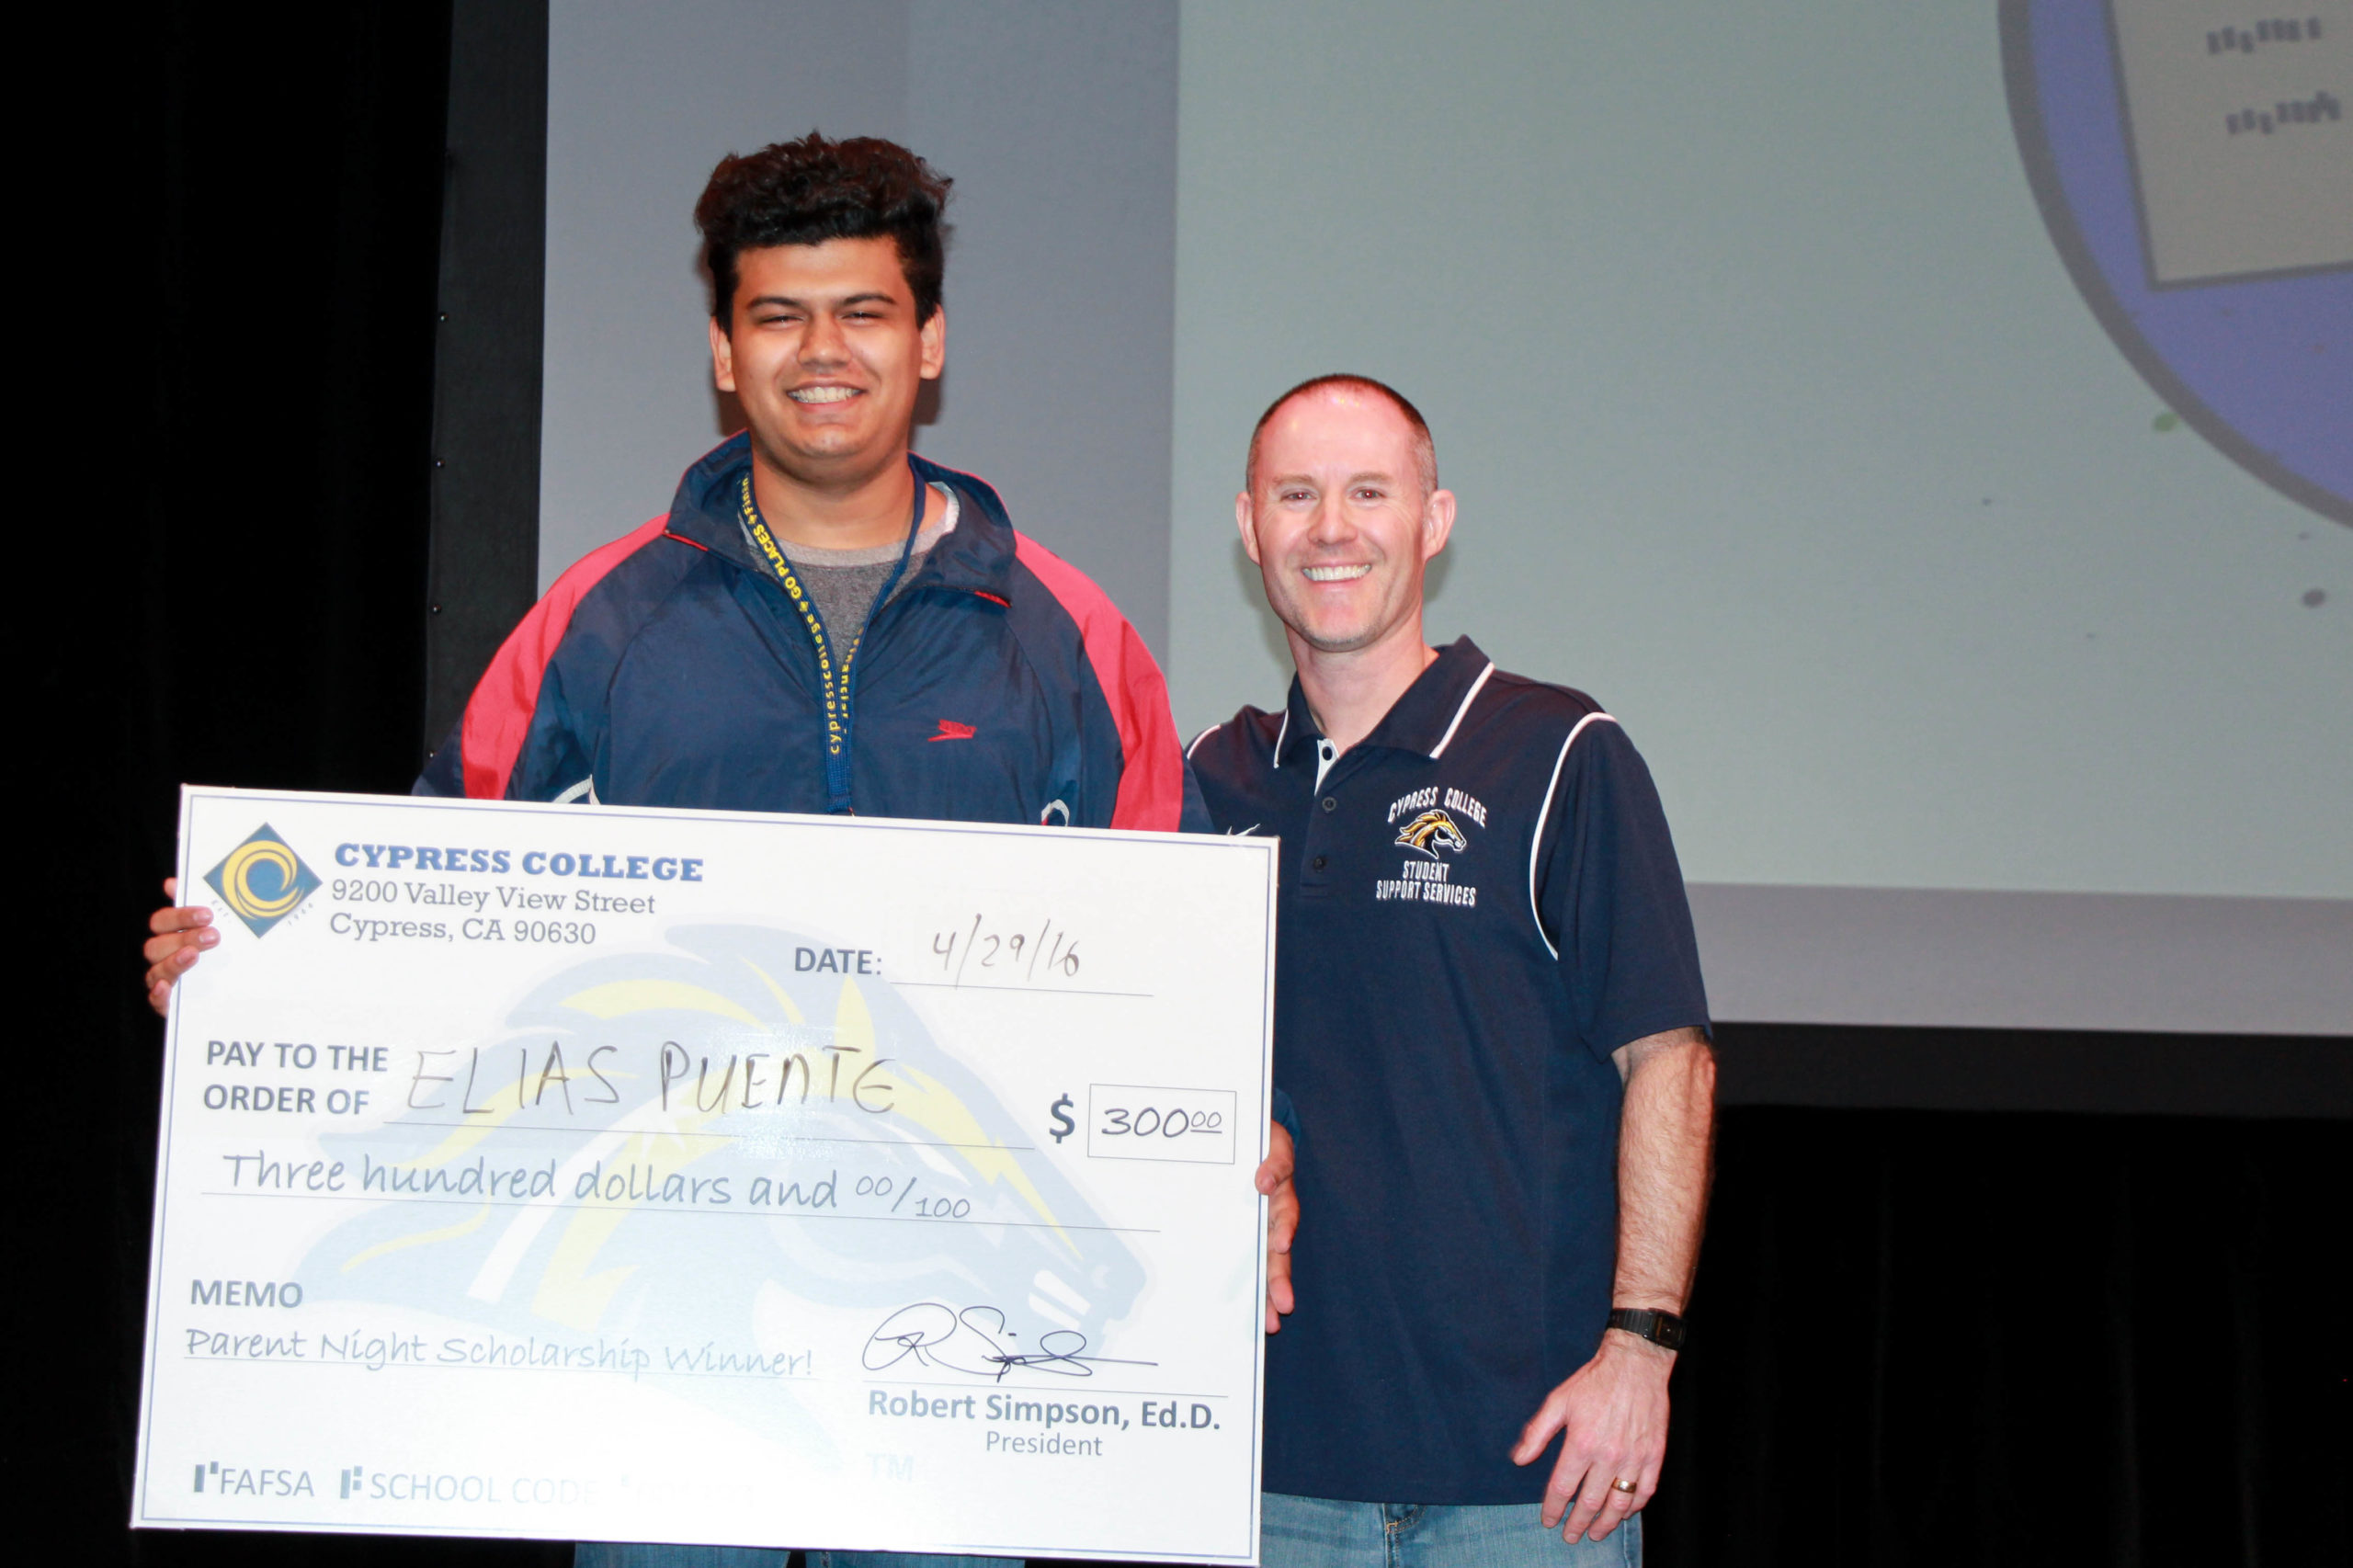 Cypress College Parent Night scholarship winner Elias Puente holding check.